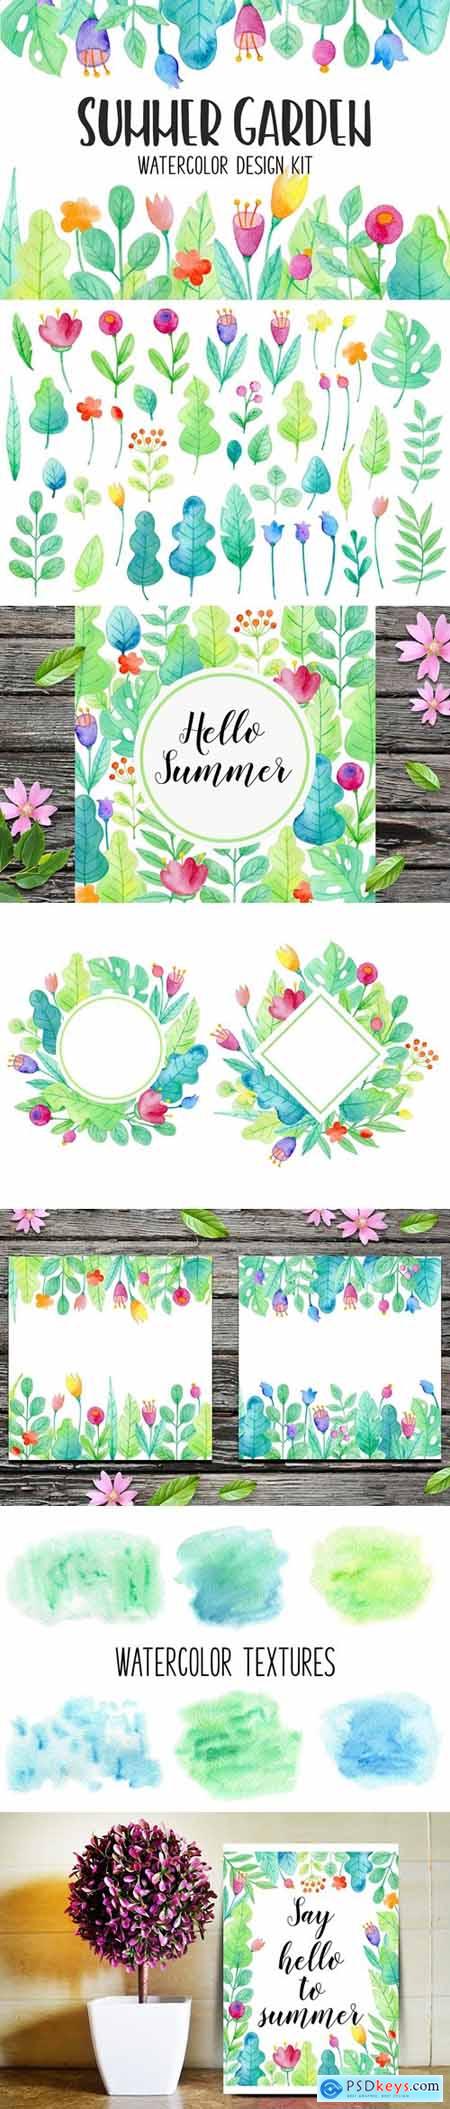 Summer Garden Watercolor Design Kit 3852066